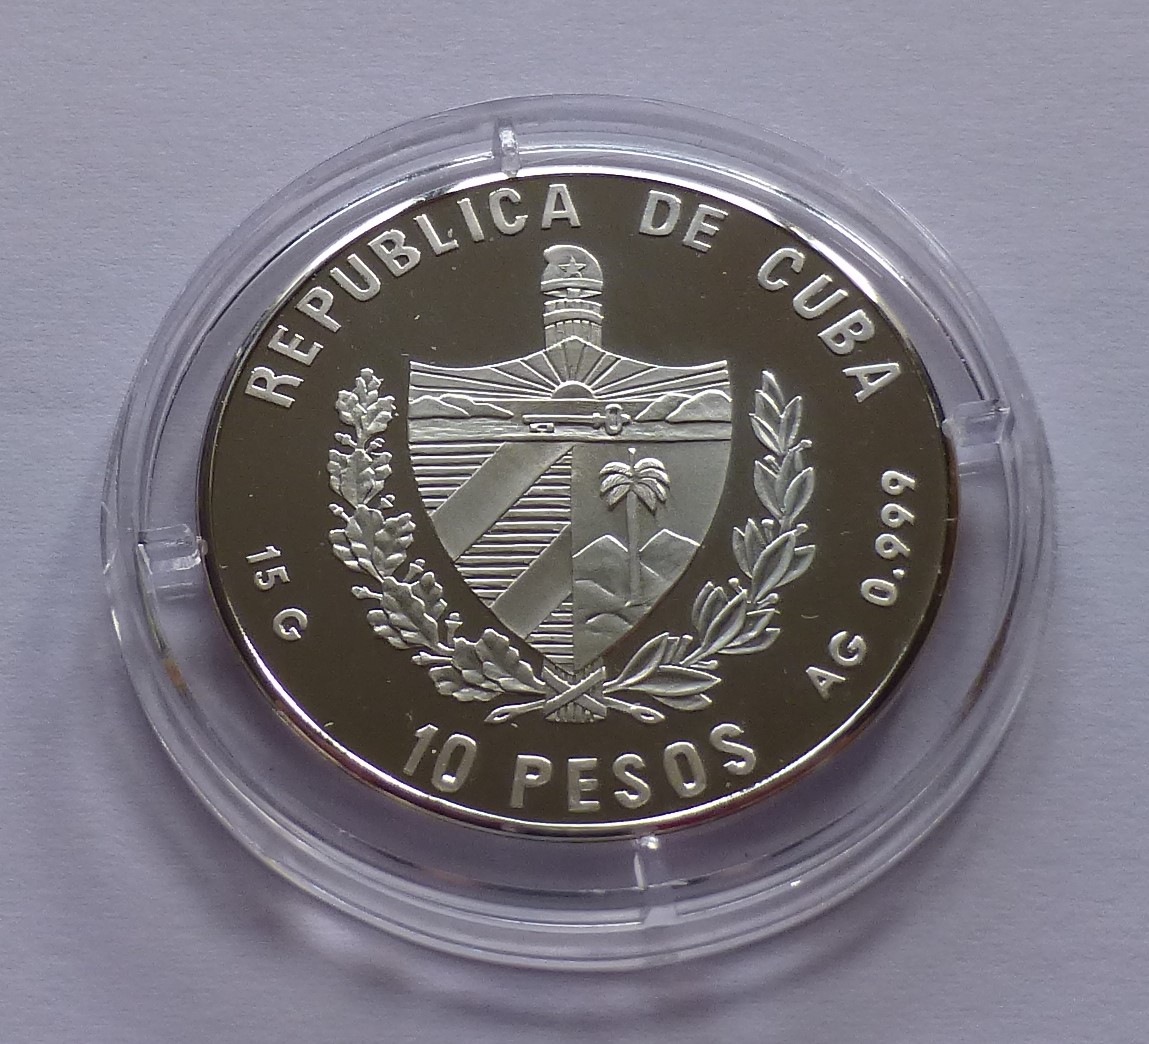  Kuba / Cuba 10 Pesos 2001, Fußball - WM Uruguay 1930 / FIFA World Cup 1930   